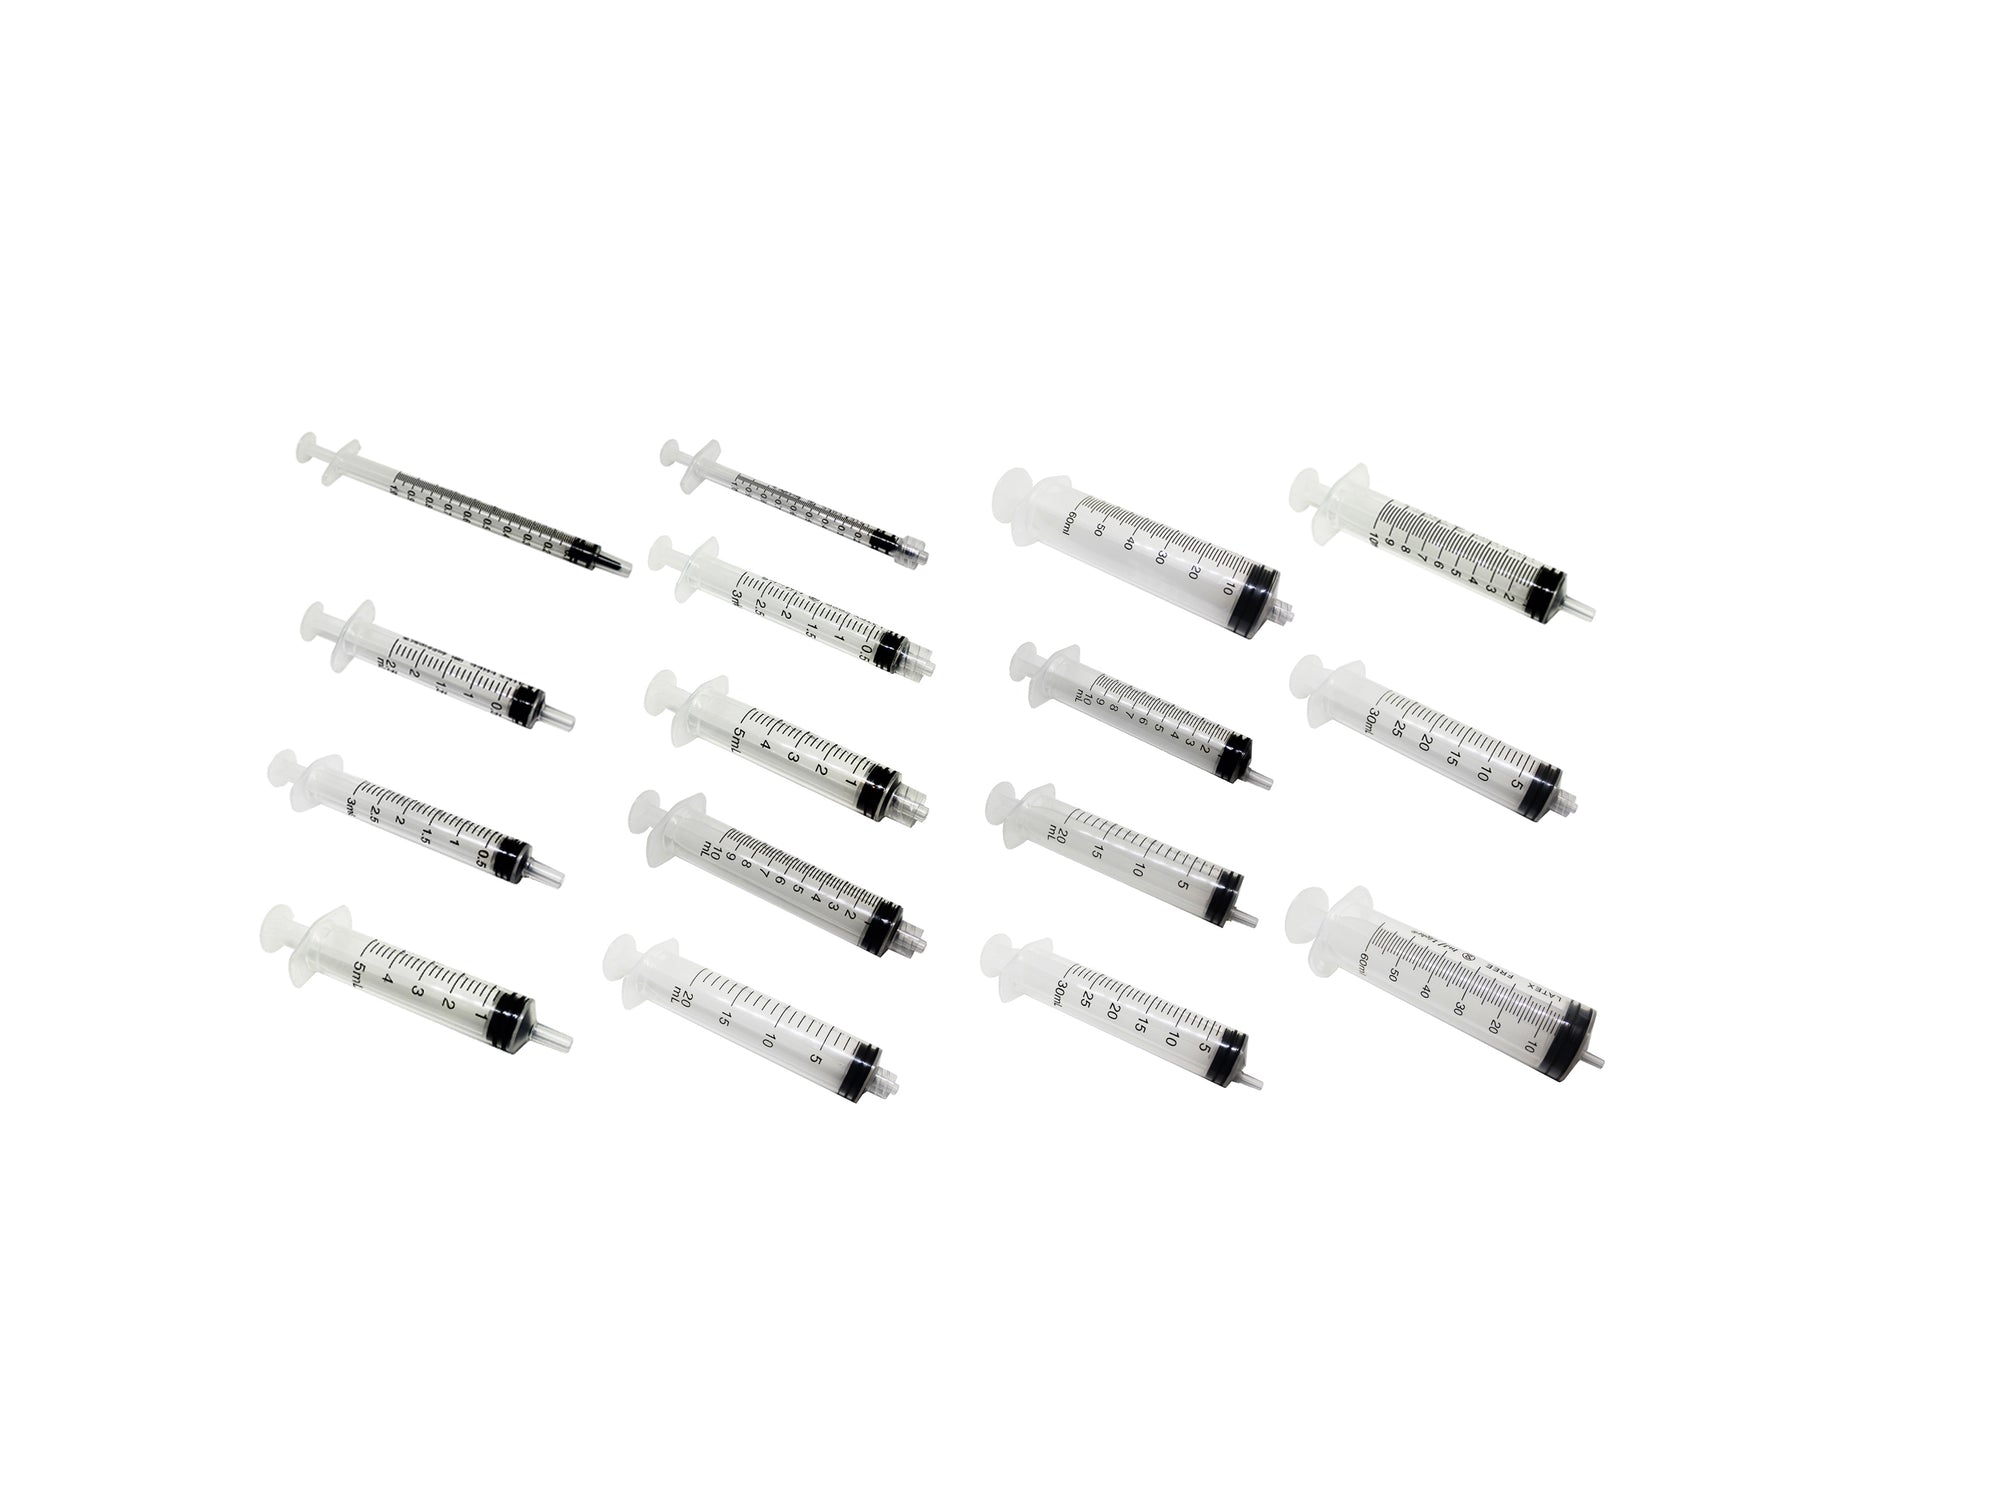 sterile latex free medical syringe 1ml, 2ml, 3ml, 5ml, 10ml, 20ml, 30ml, 60ml luer slip, luer lock eccentric tip ce marked